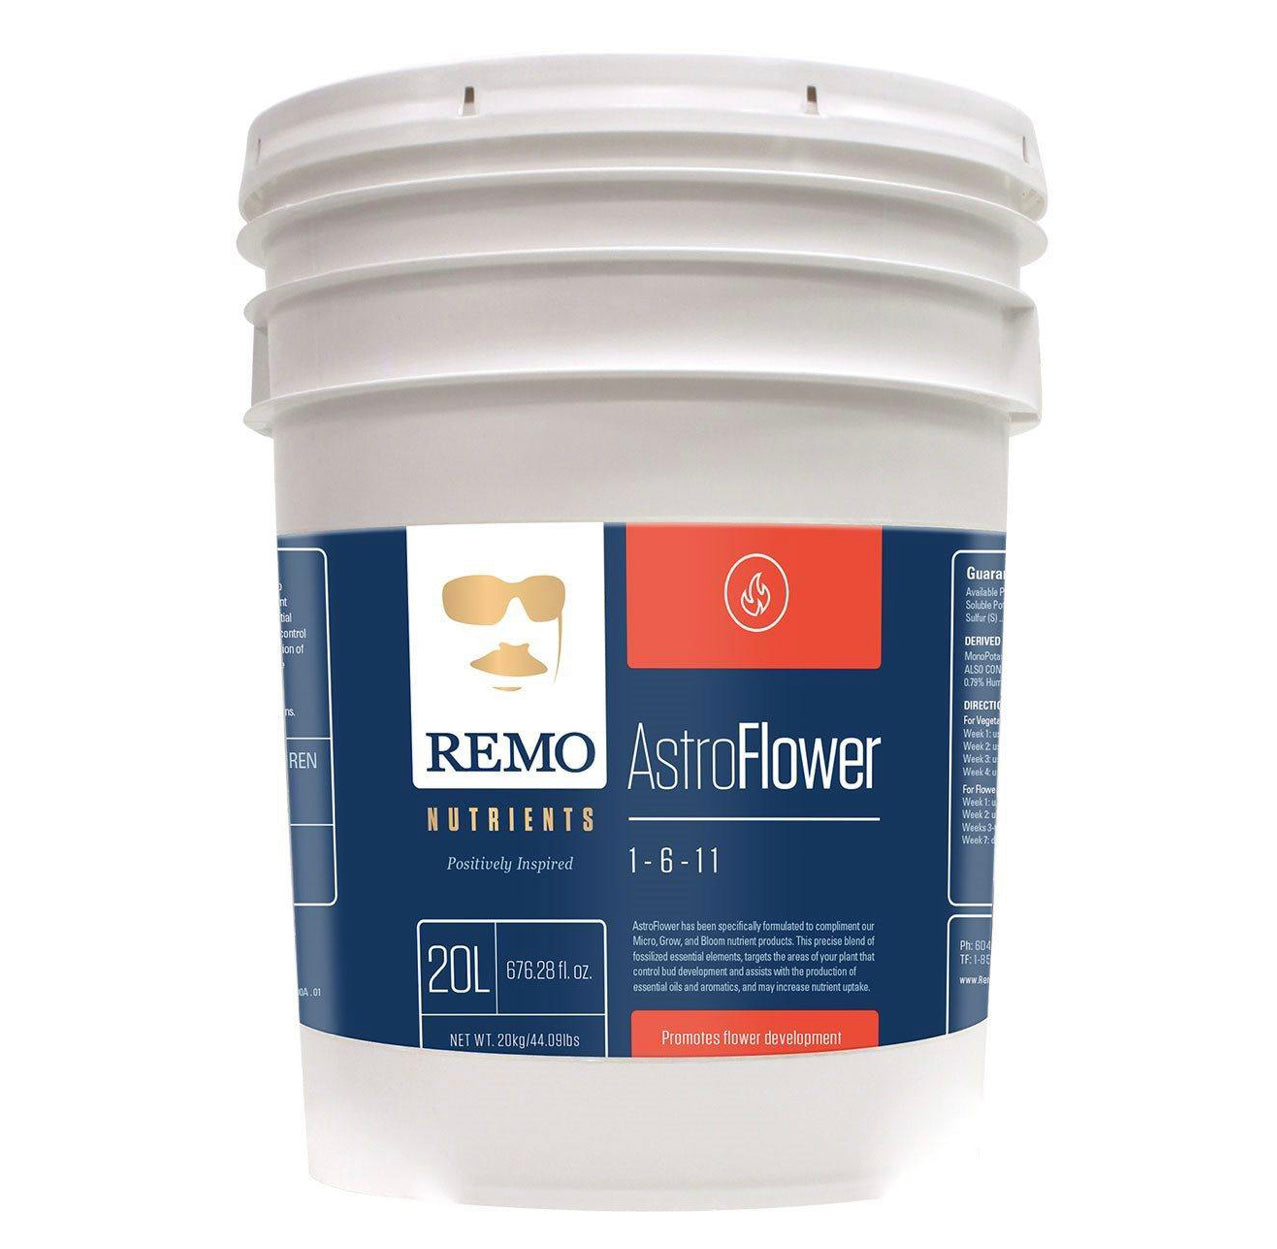 Remo Nutrients AstroFlower (1-6-11)